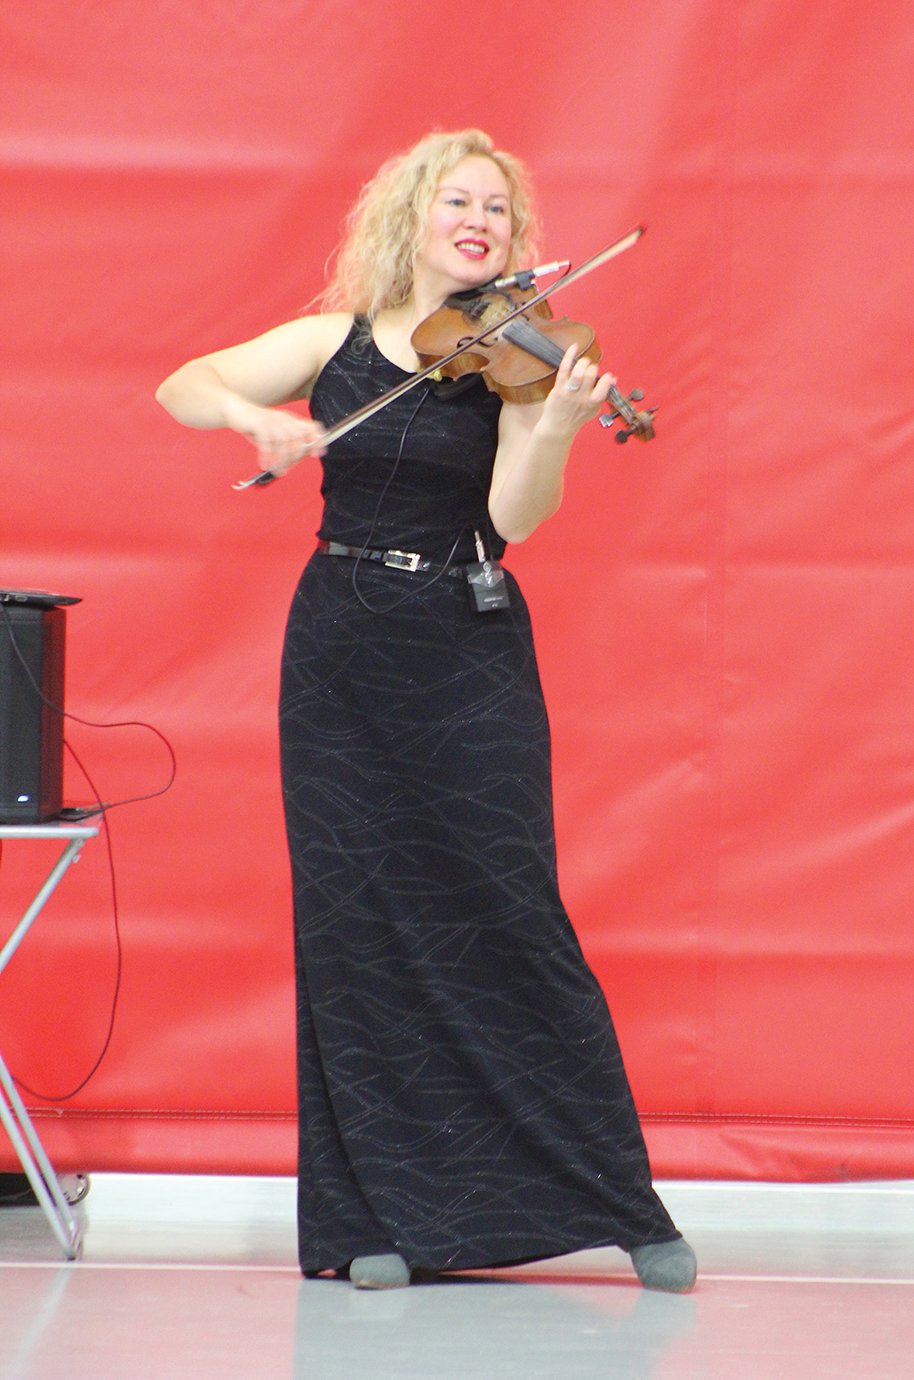 As in previous years, violinist Olga Berezhnaya serenades guests Wednesday at Southmont